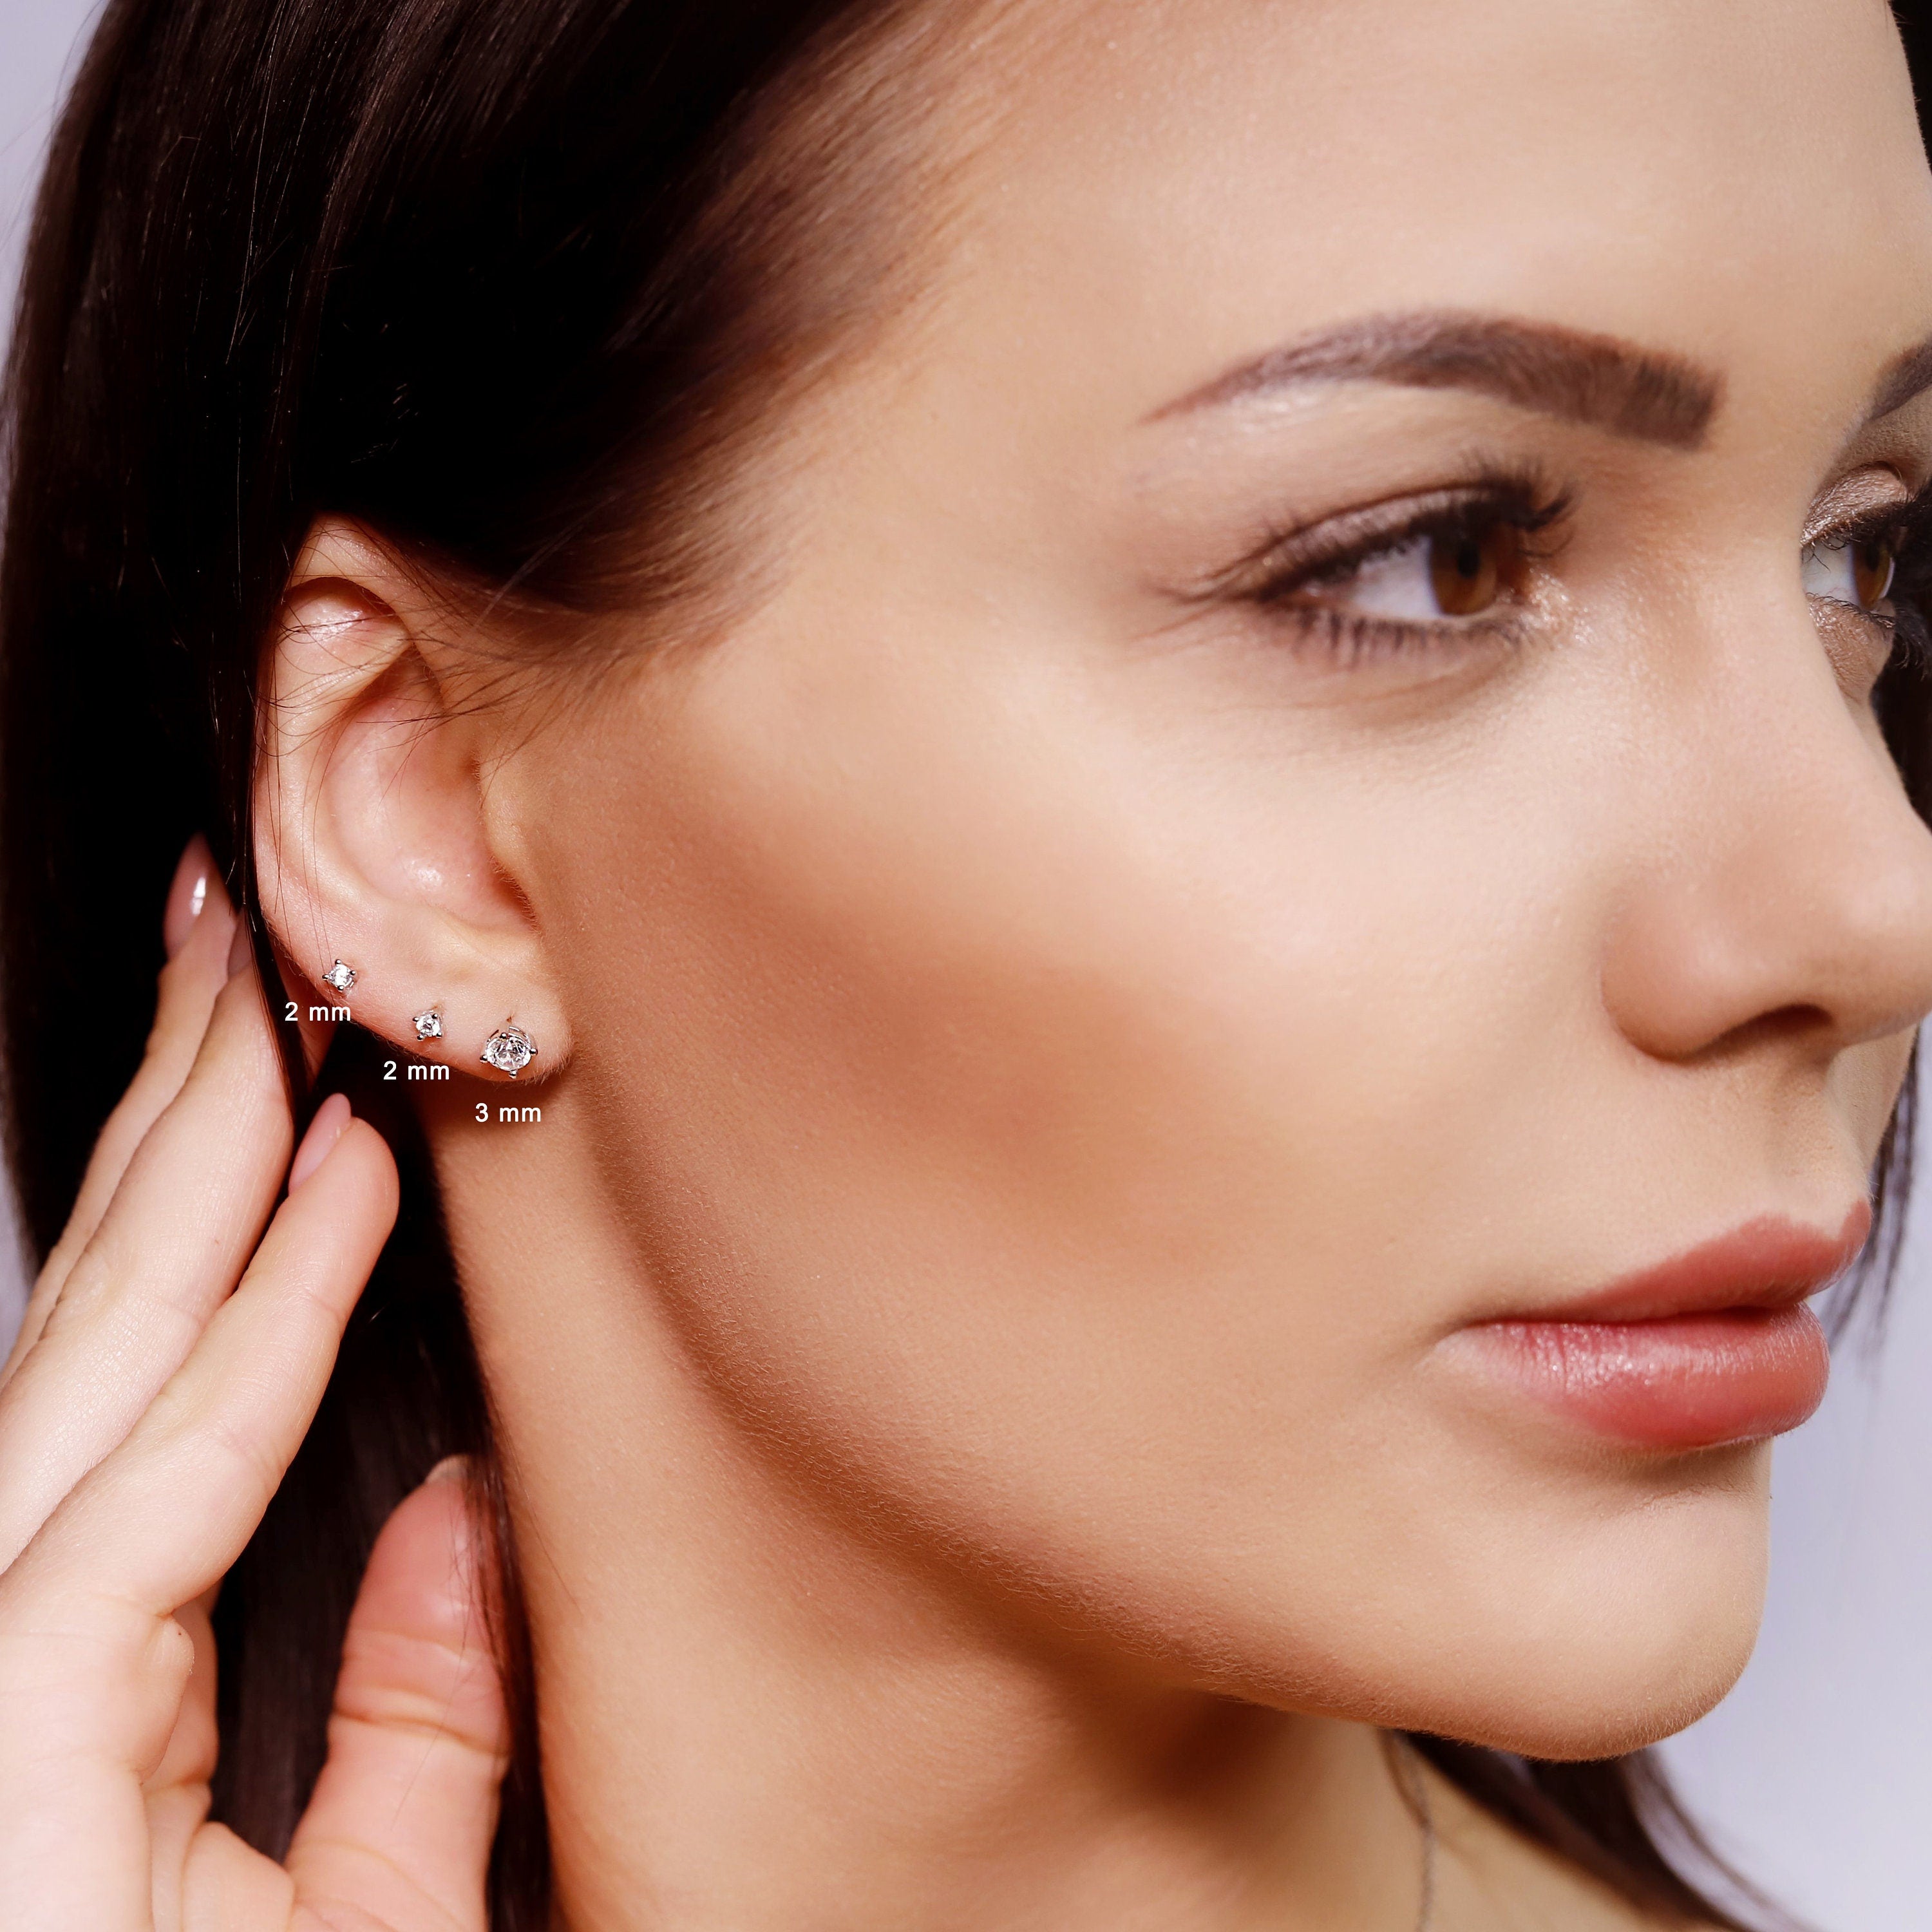 Tiny Stud Earrings - Round Minimalist Earrings - Minimalist Earrings Set- CZ Studs - CZ Tiny Earrings - Earrings Sets for Multiple Piercings